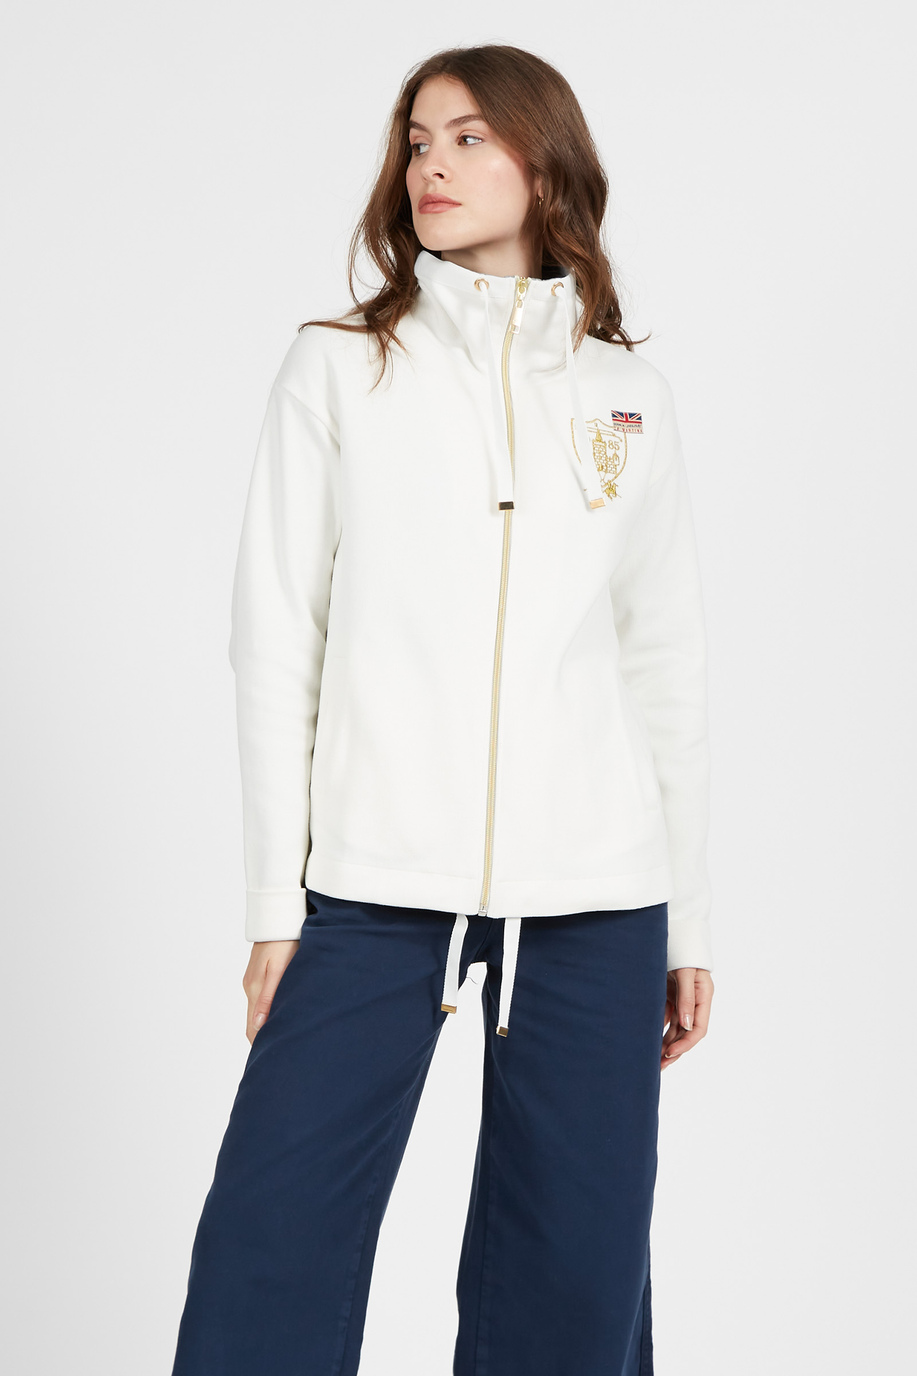 Women’s cotton high neck sweatshirt with regular fit zip front closure | La Martina - Official Online Shop